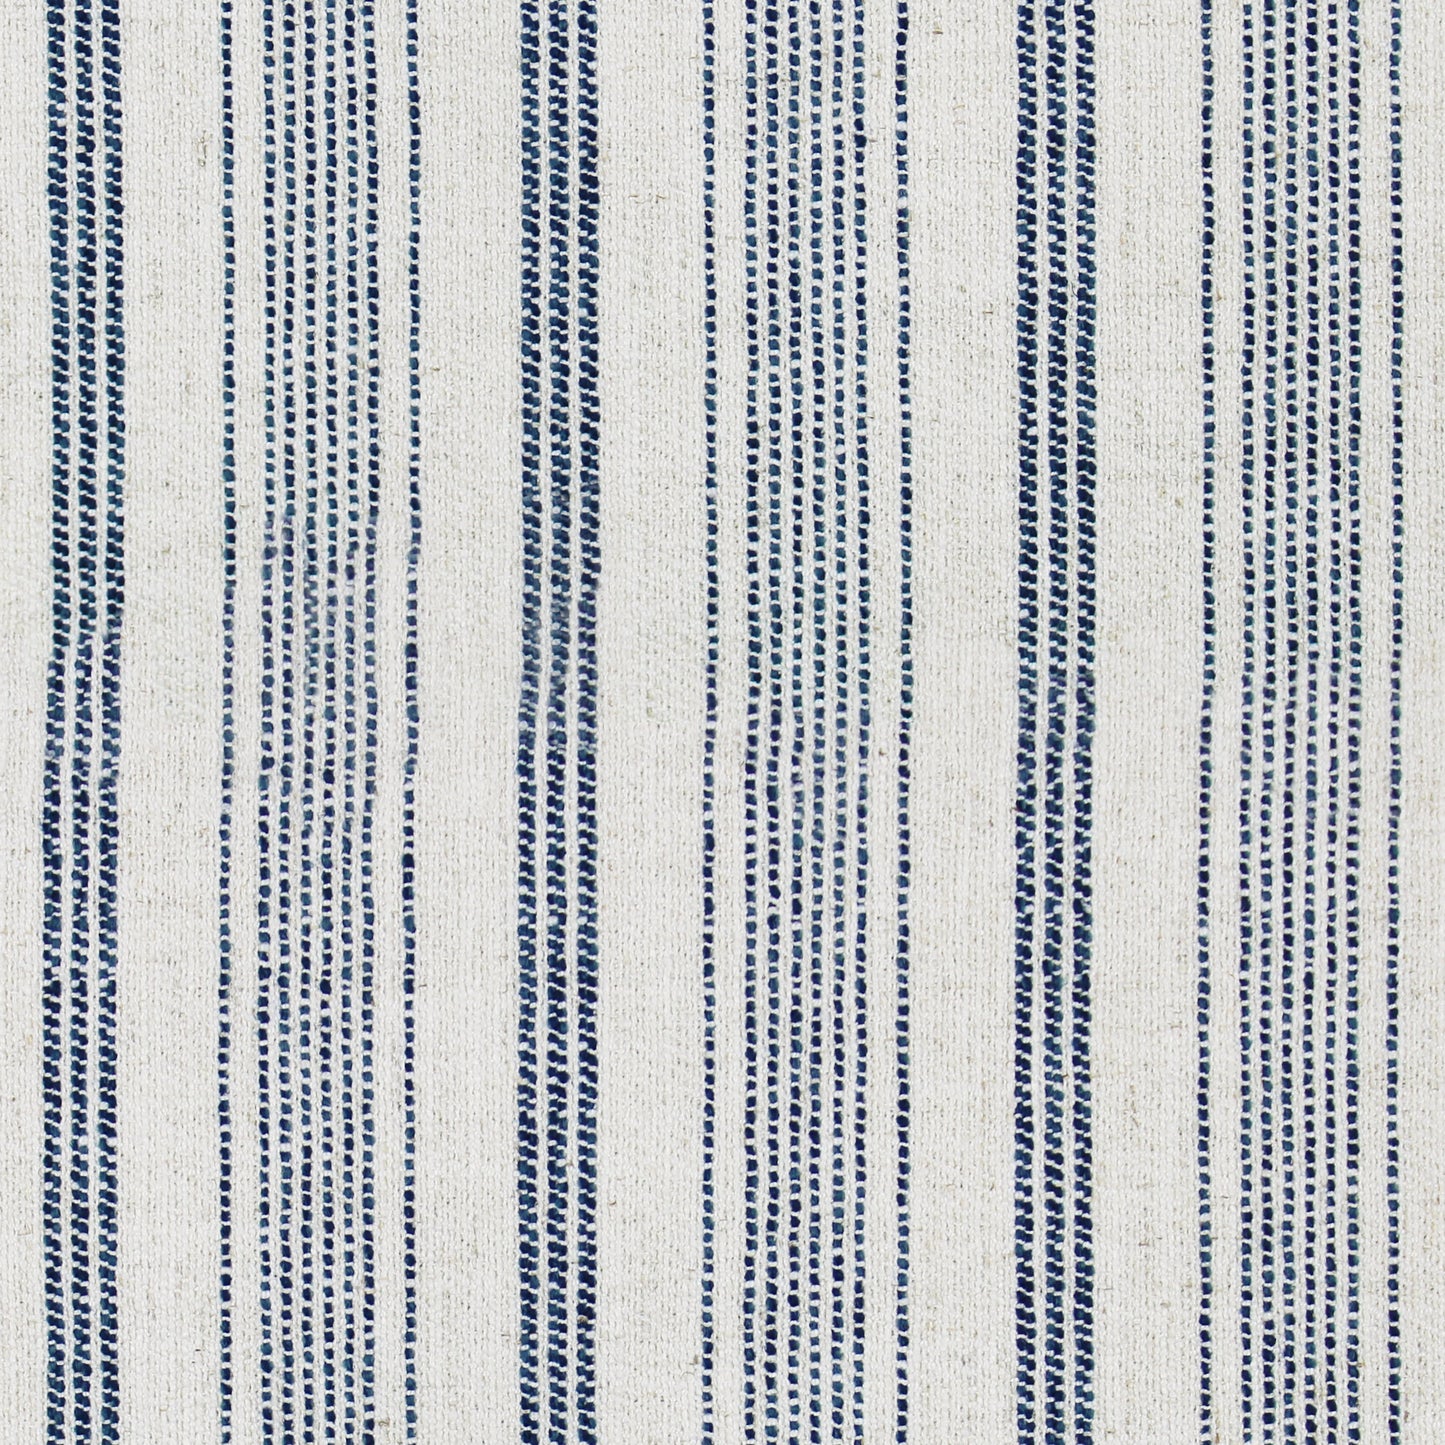 Gifford : Performance Linen & Woven Stripe